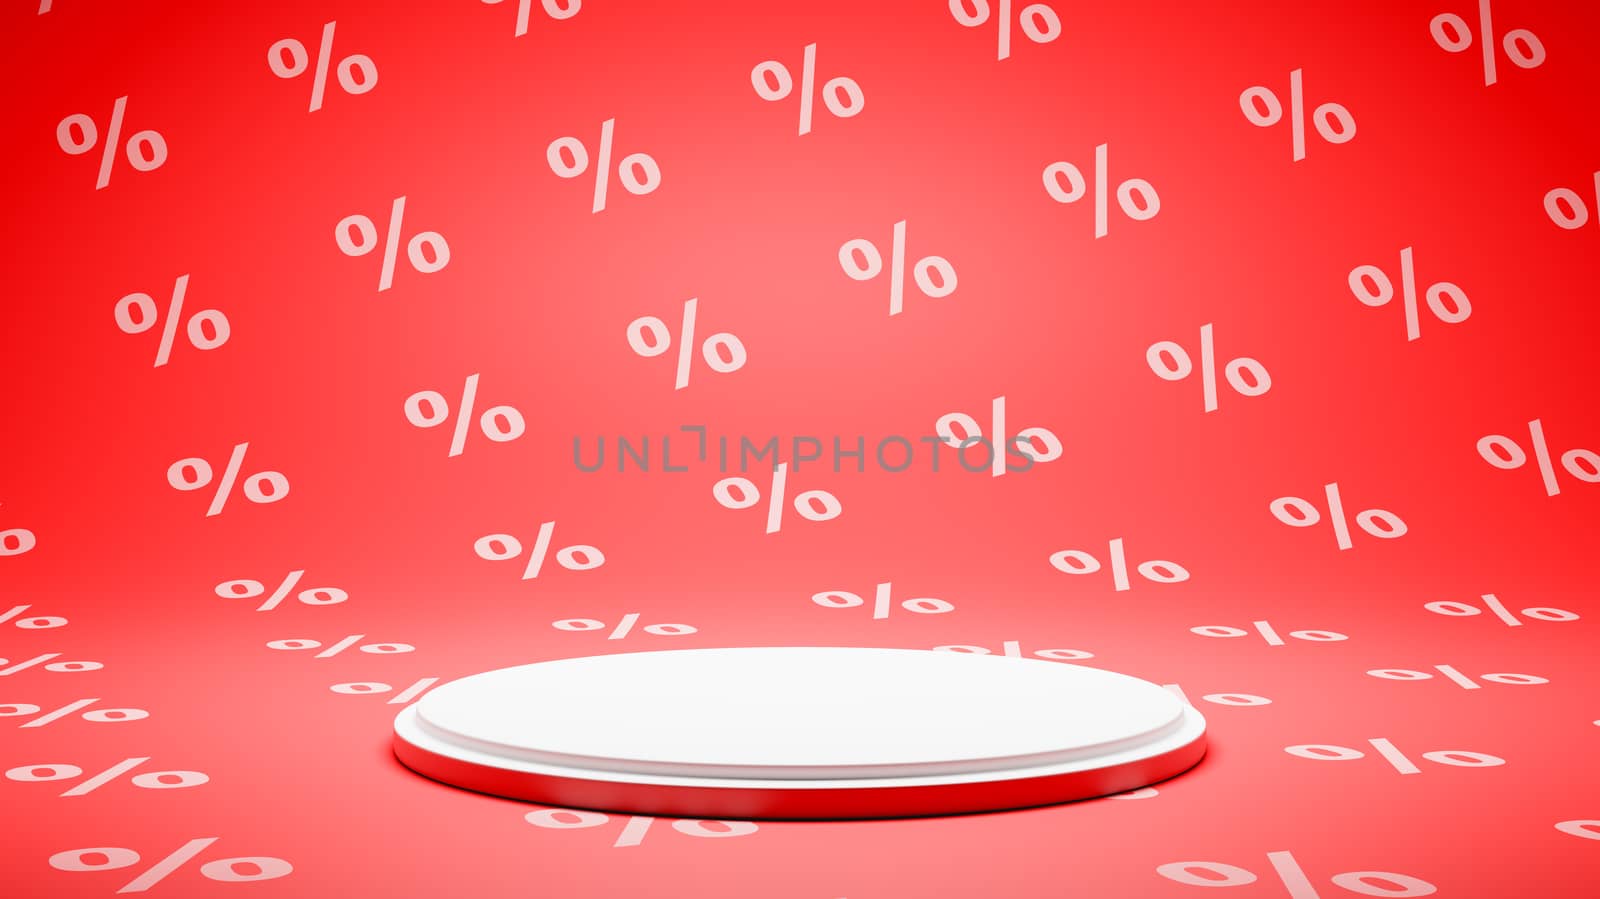 Empty White Platform on Red and White Percent Sign Pattern Studio Background 3D Render Illustration